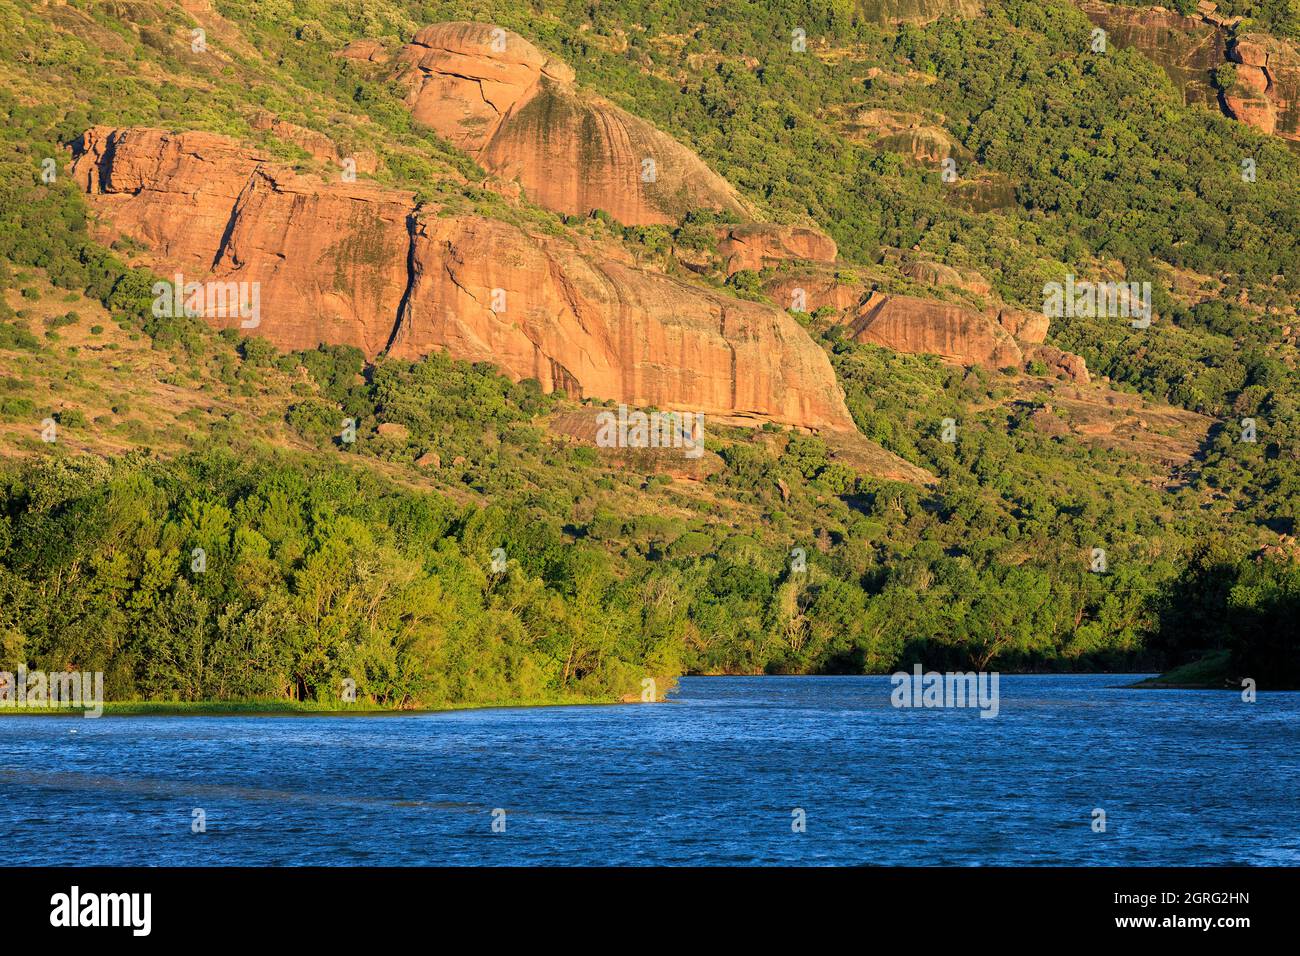 France, Var, Roquebrune sur Argens, Arena lake with the Argens river, rock of Roquebrune Stock Photo